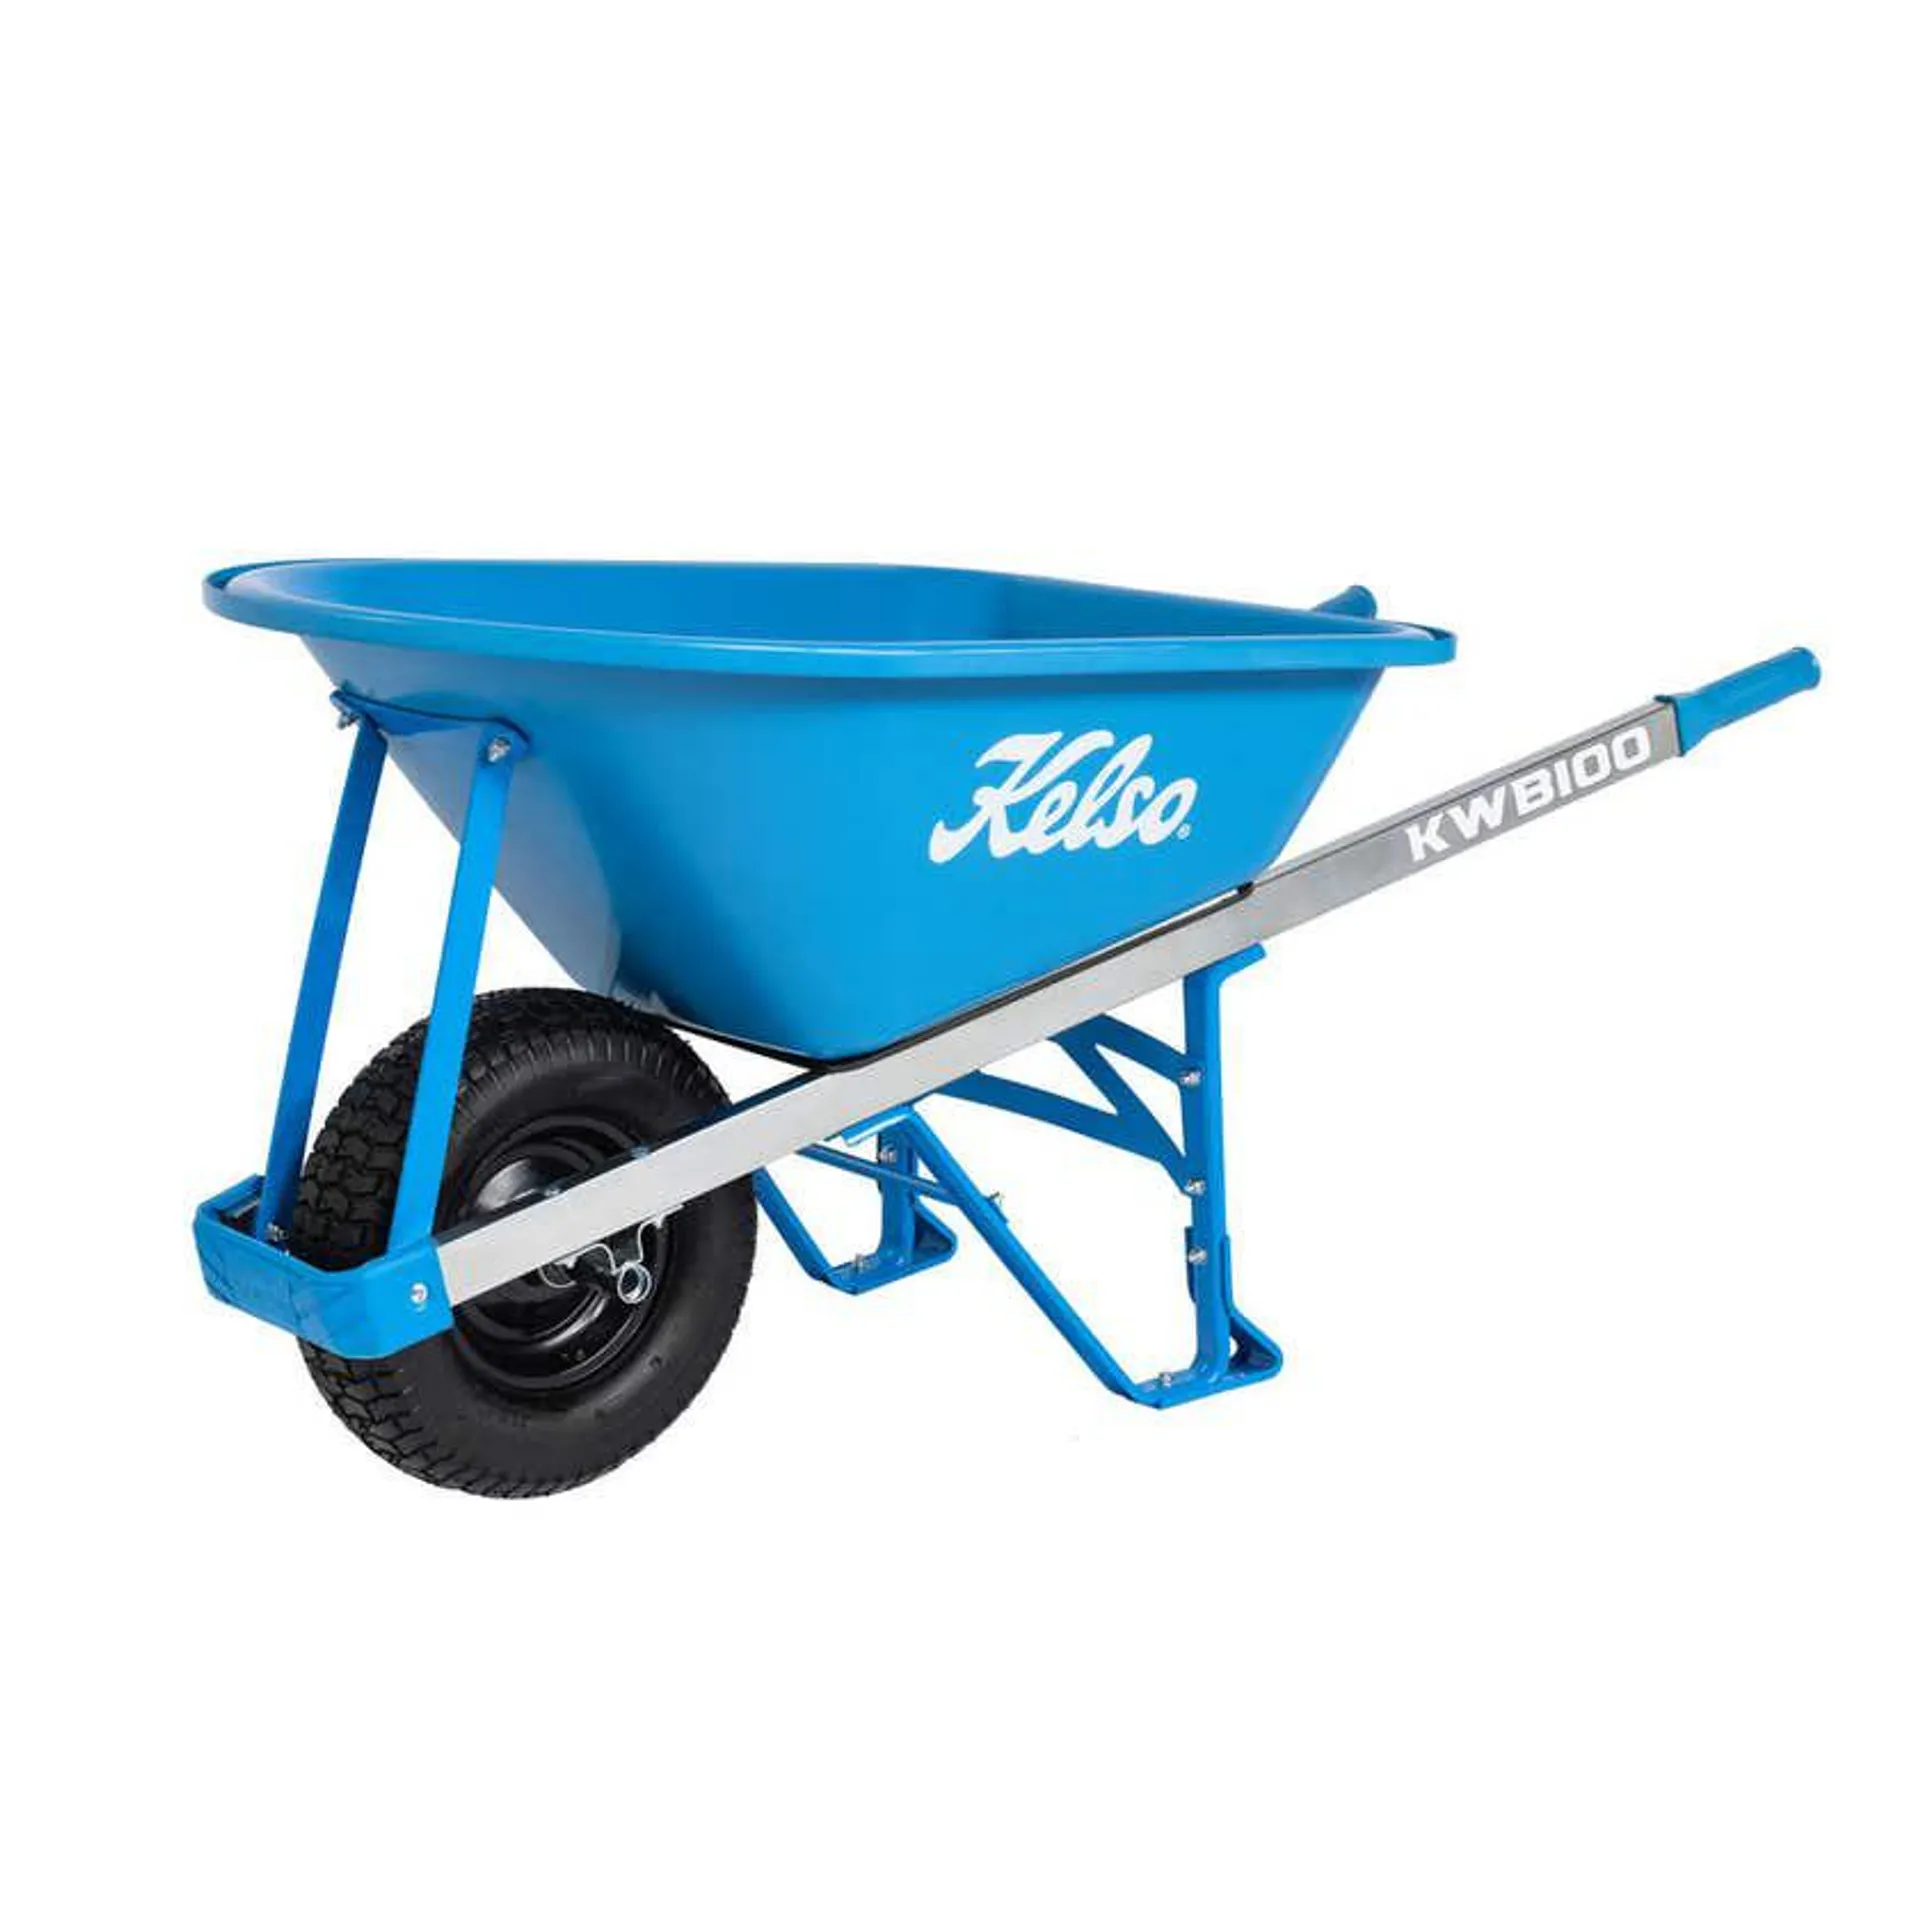 Kelso Workman Wheelbarrow Poly Tray 100L